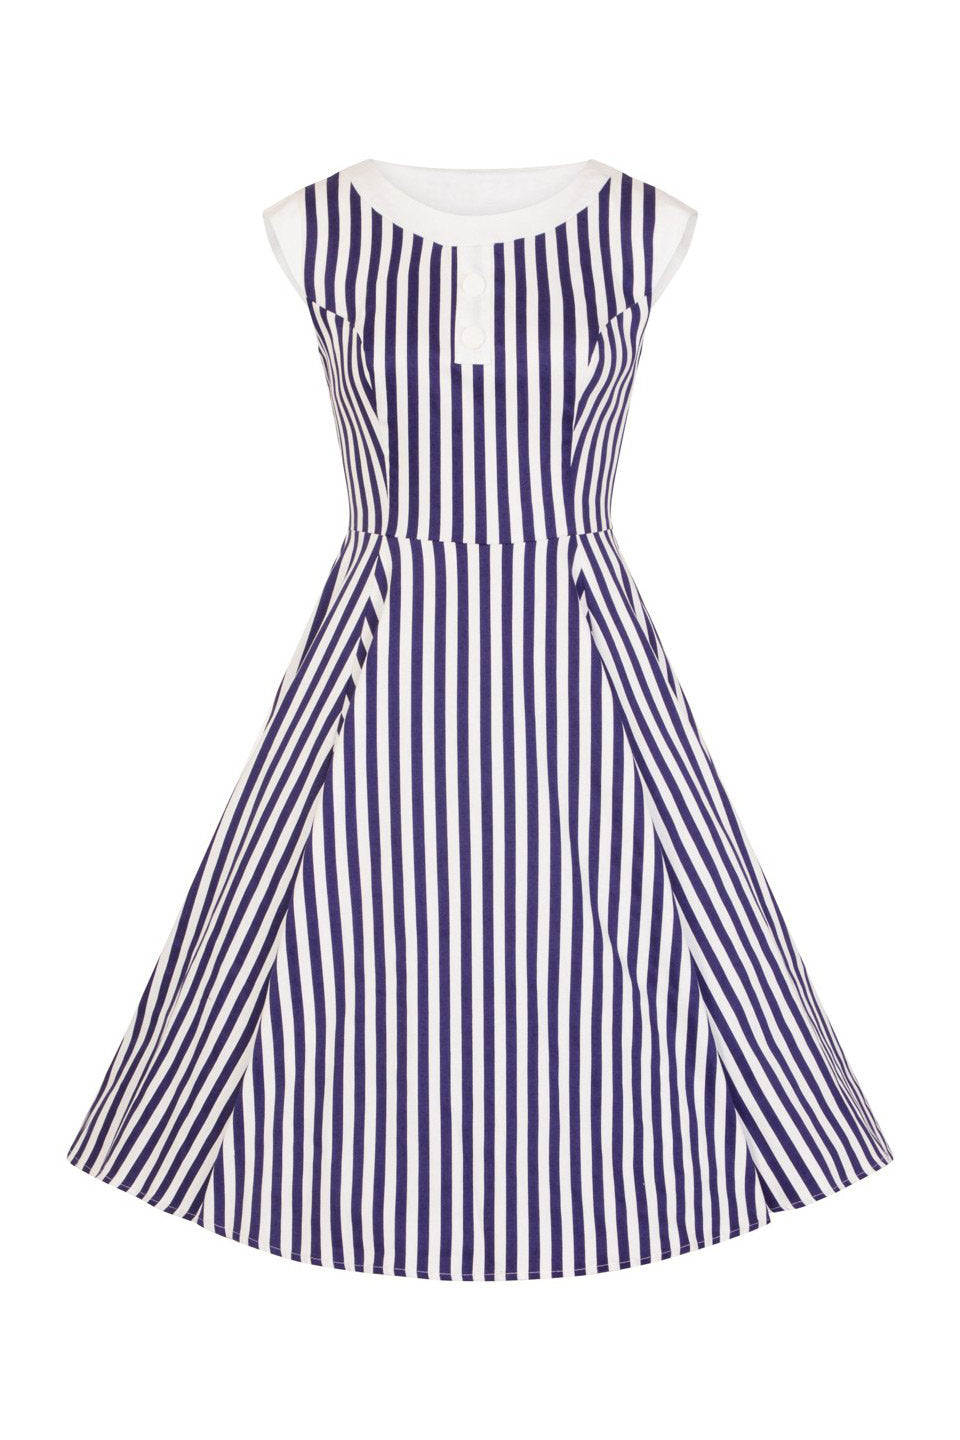 Navy Blue and White Striped Sleeveless Rockabilly 50s Swing Dress - Pretty Kitty Fashion